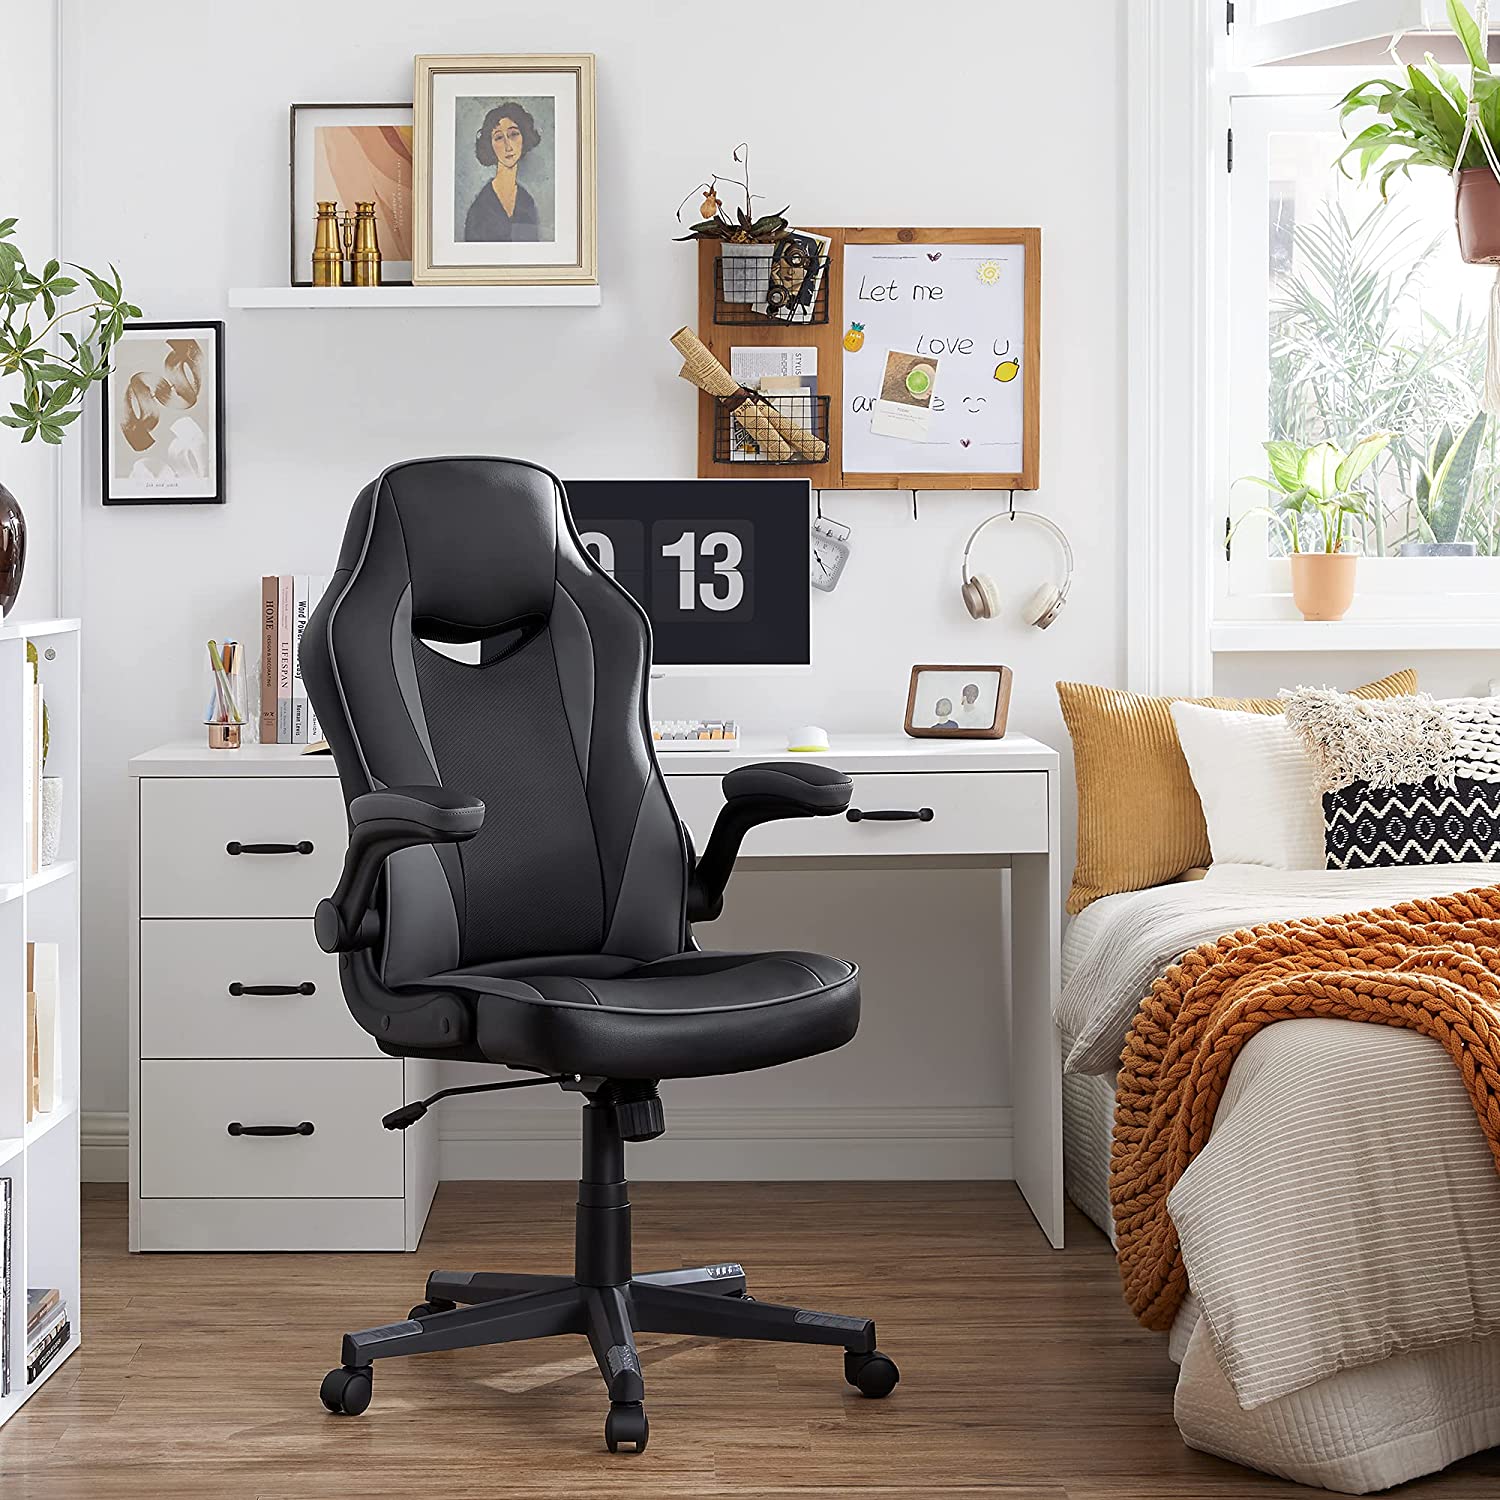 Bürostuhl aus Kunstleder bis 150 kg belastbar Schwarz-Grau